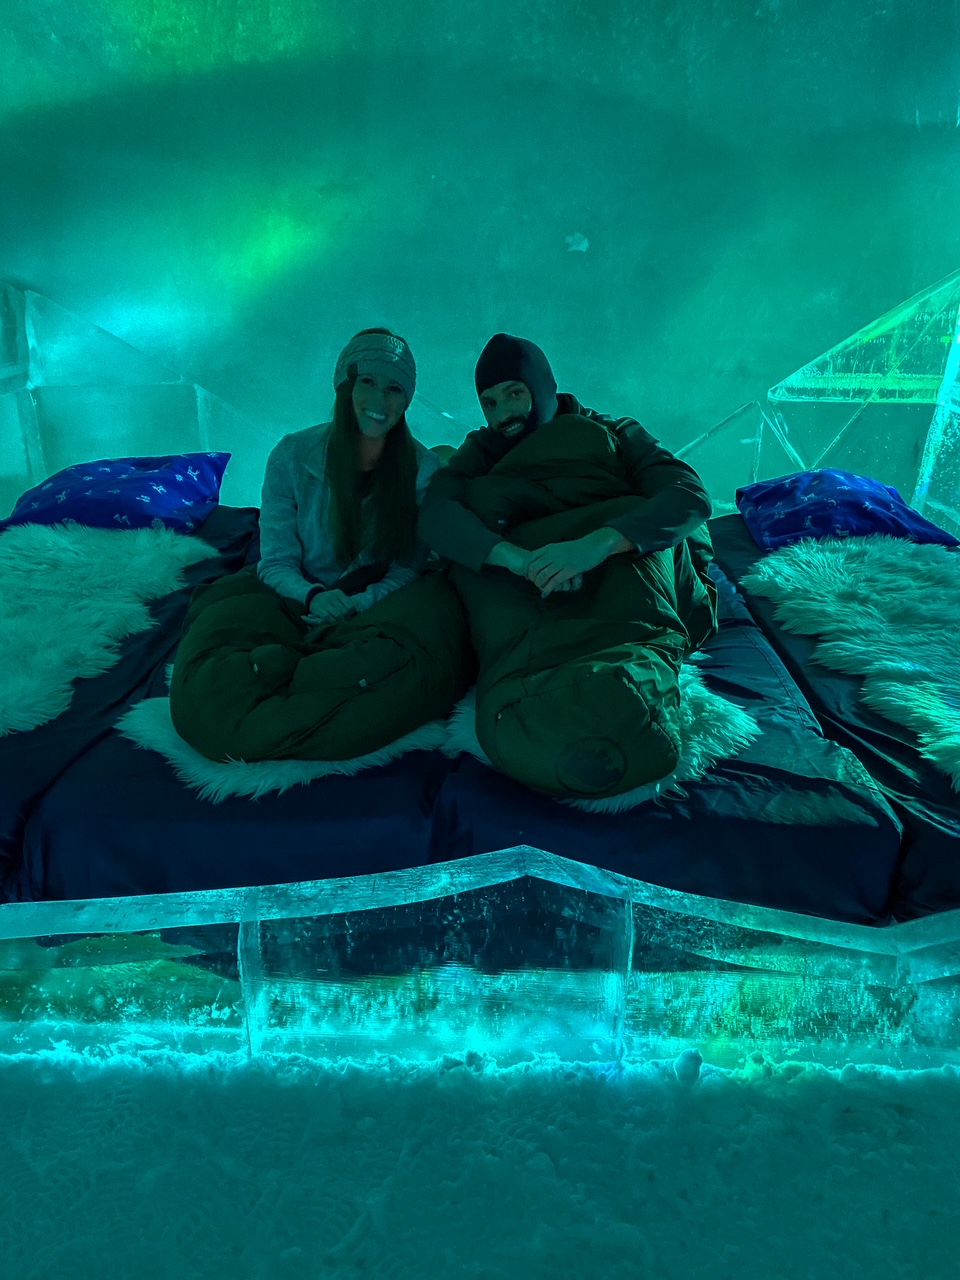 snuggled up in sleeping bags at the Snowhotel Kirkenes